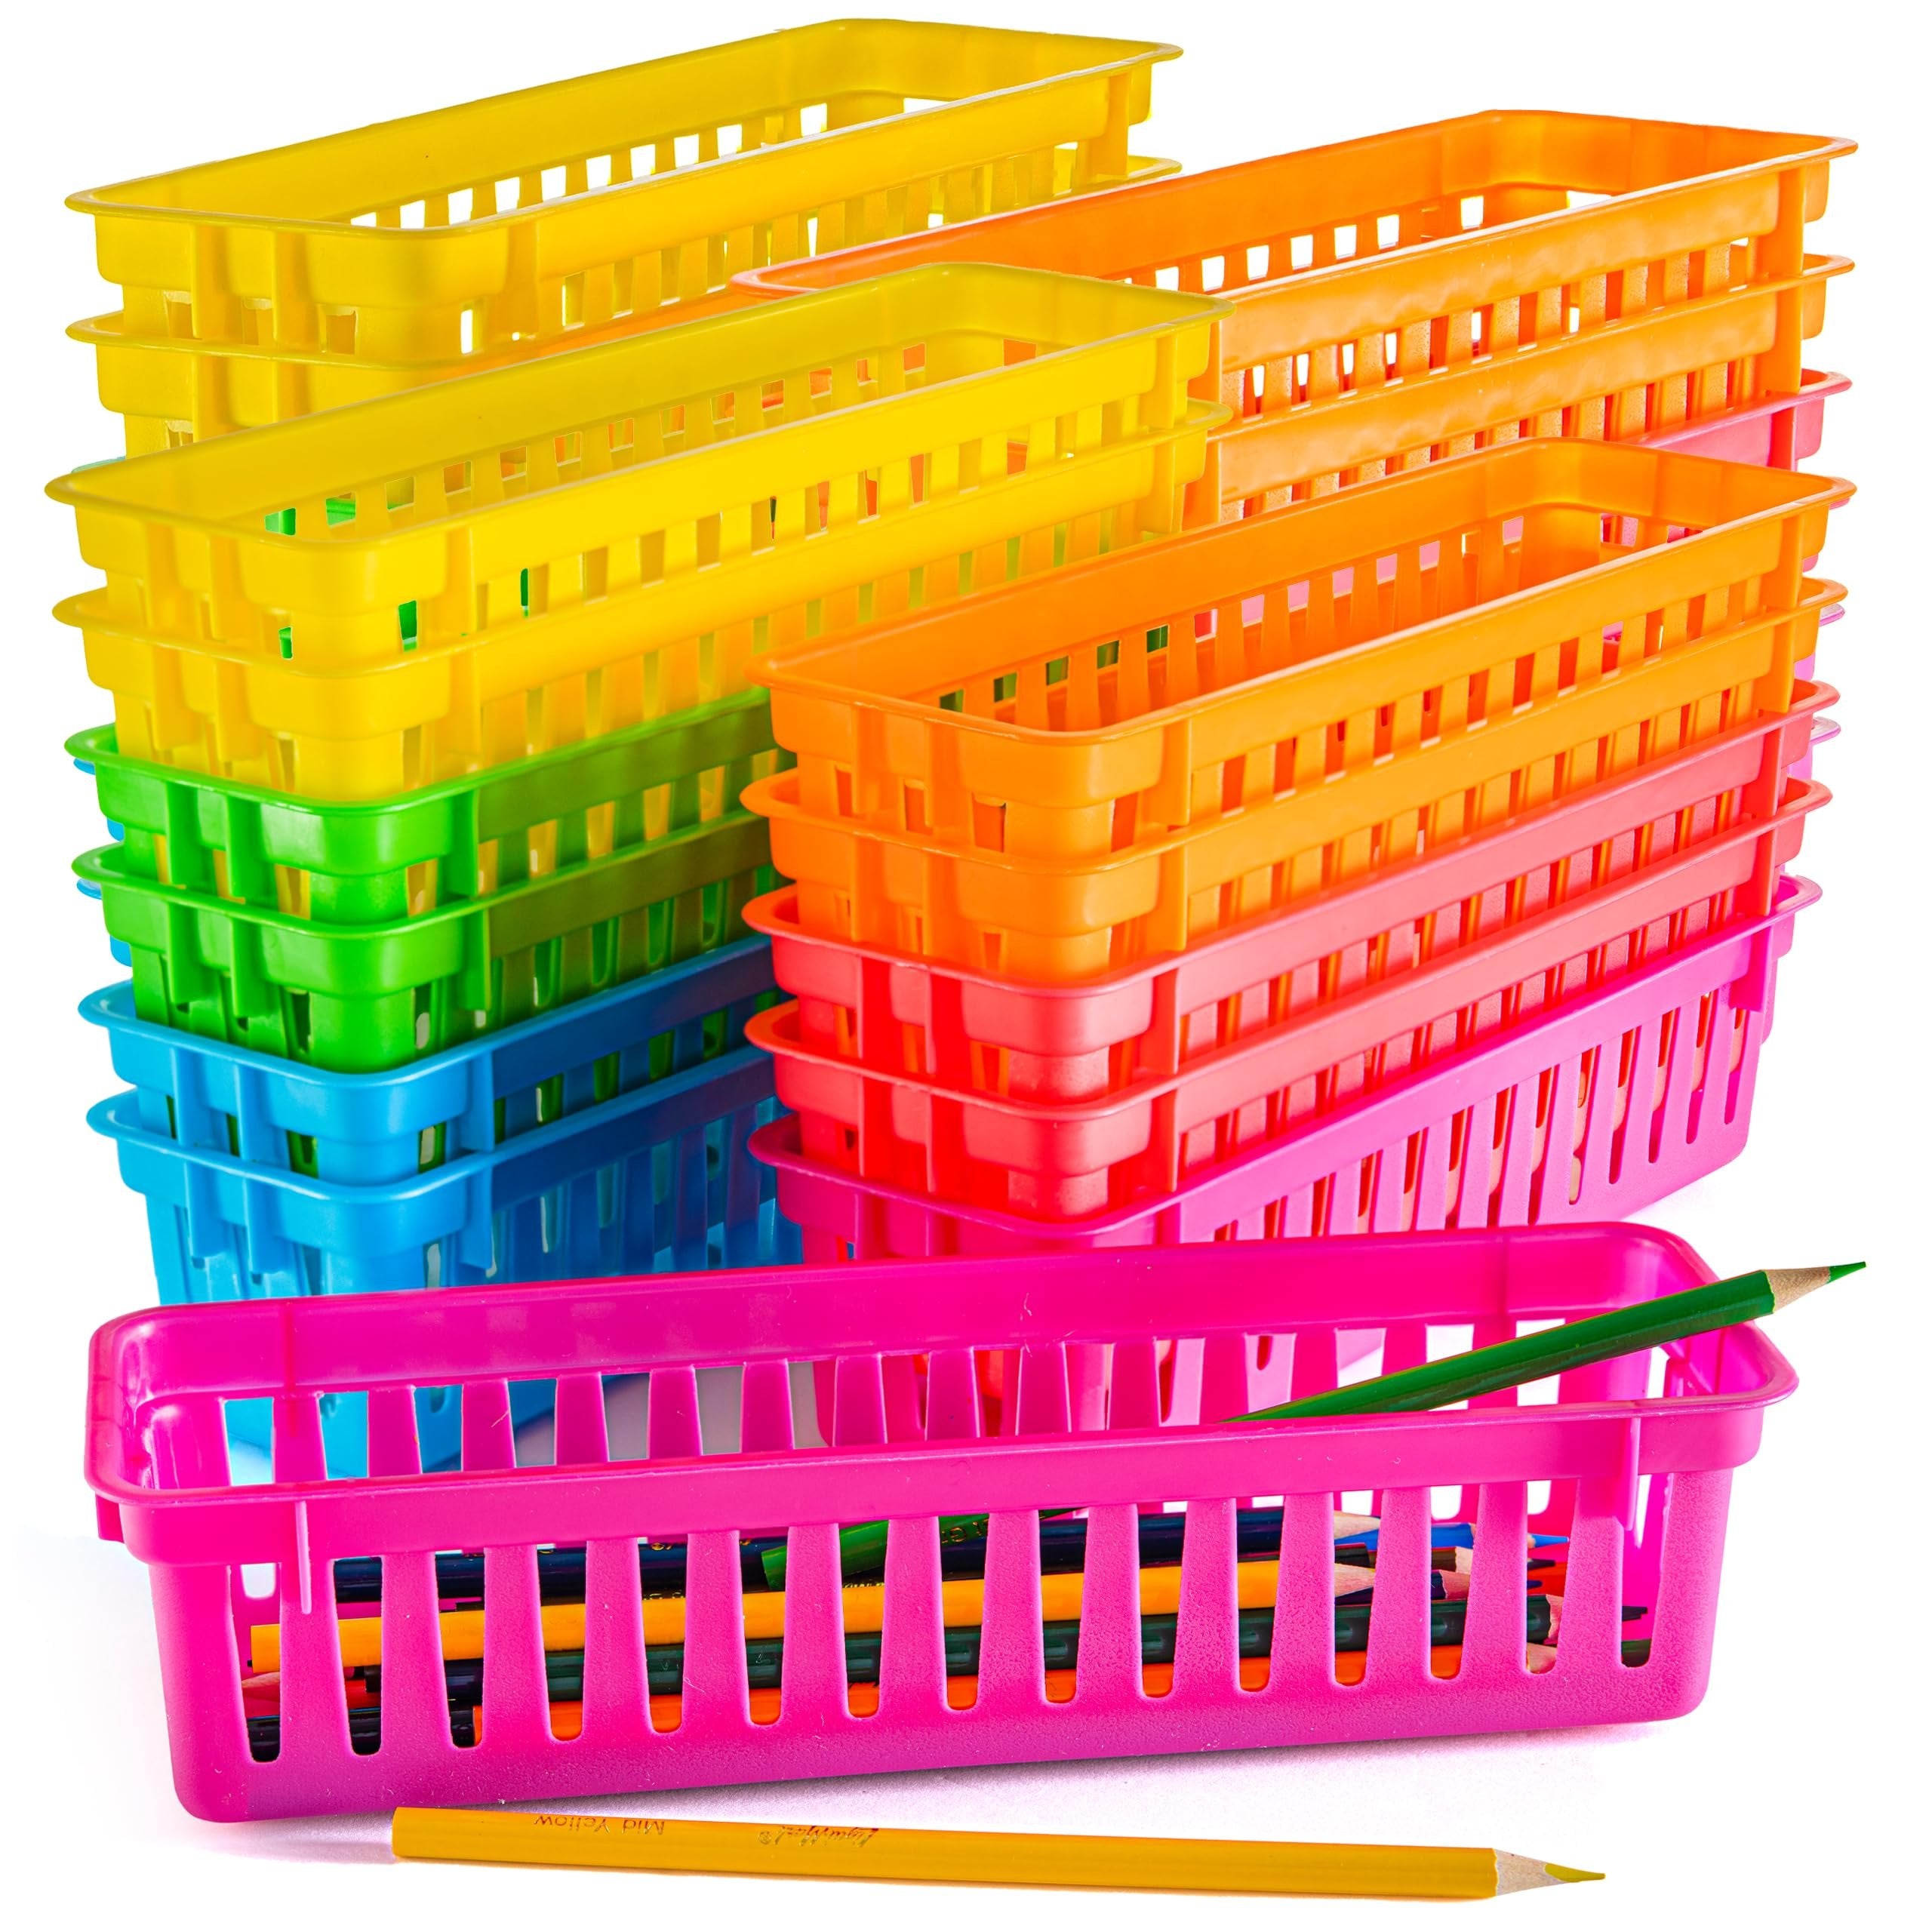 Prextex Classroom Pencil Organizer Pencil Basket or Crayon Basket, Variety Colors (12 pack)